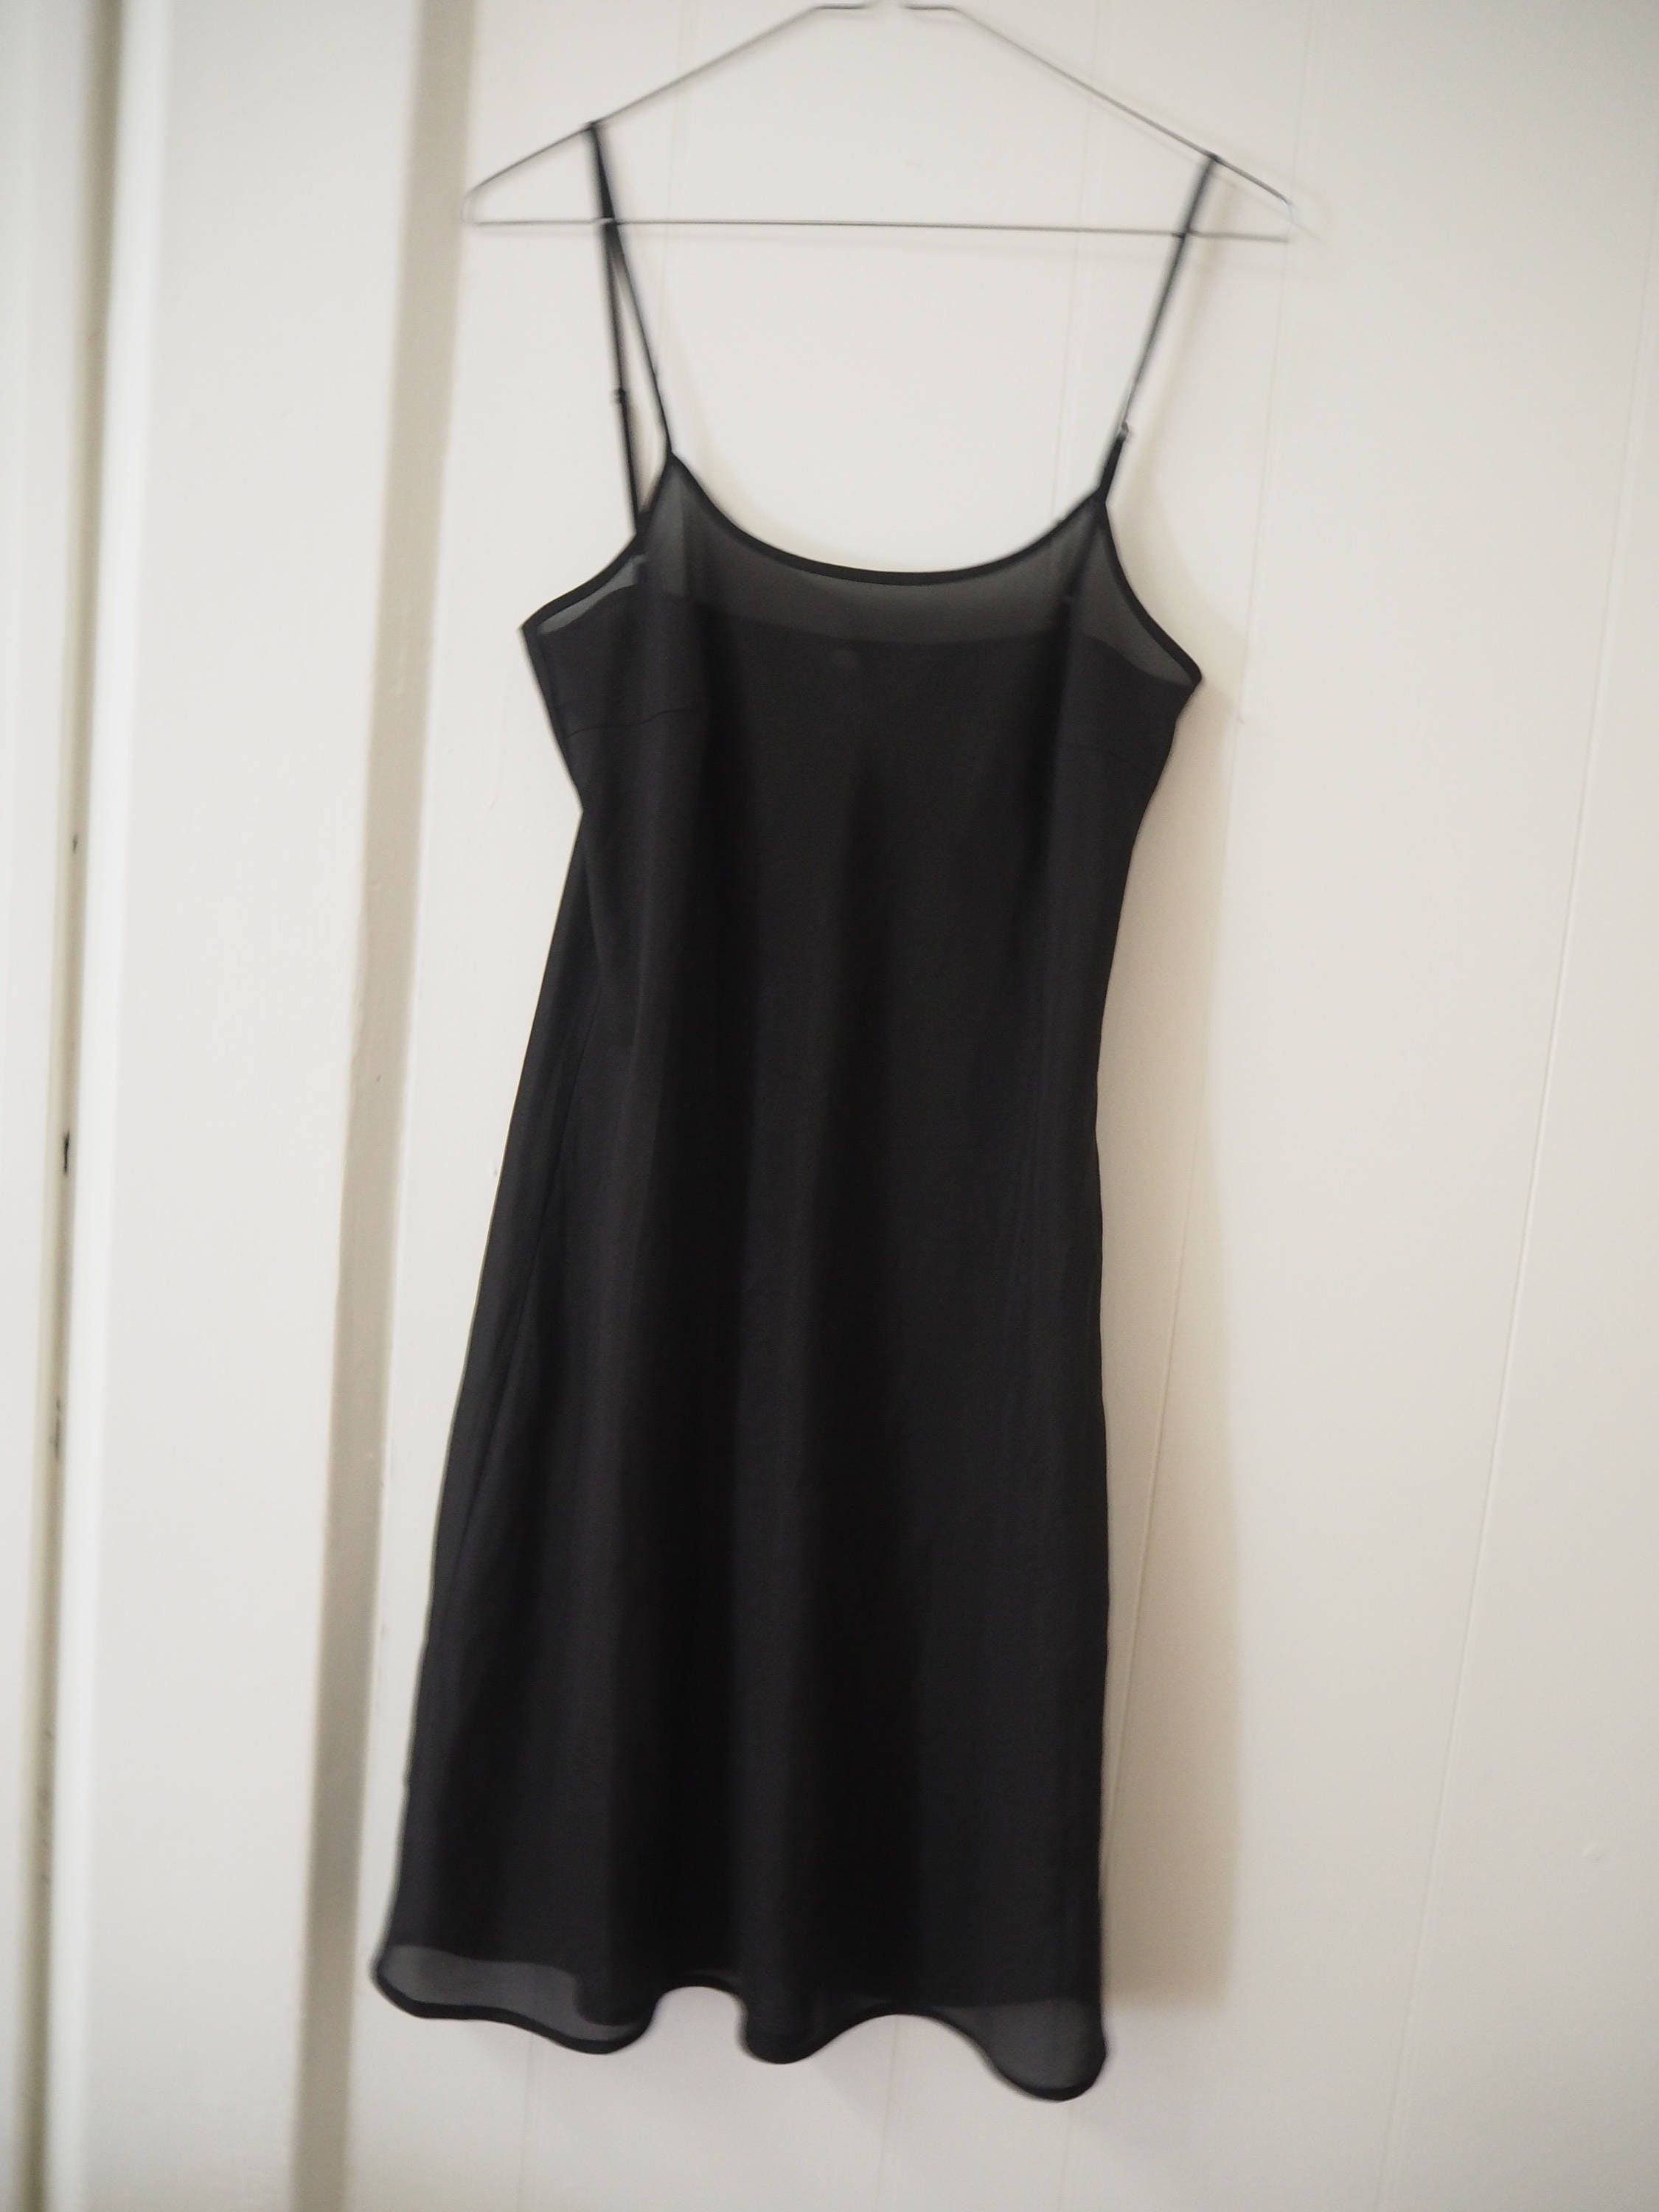 Black Slip Dress See-through Sheer Nightie Petticoat Slip - Etsy